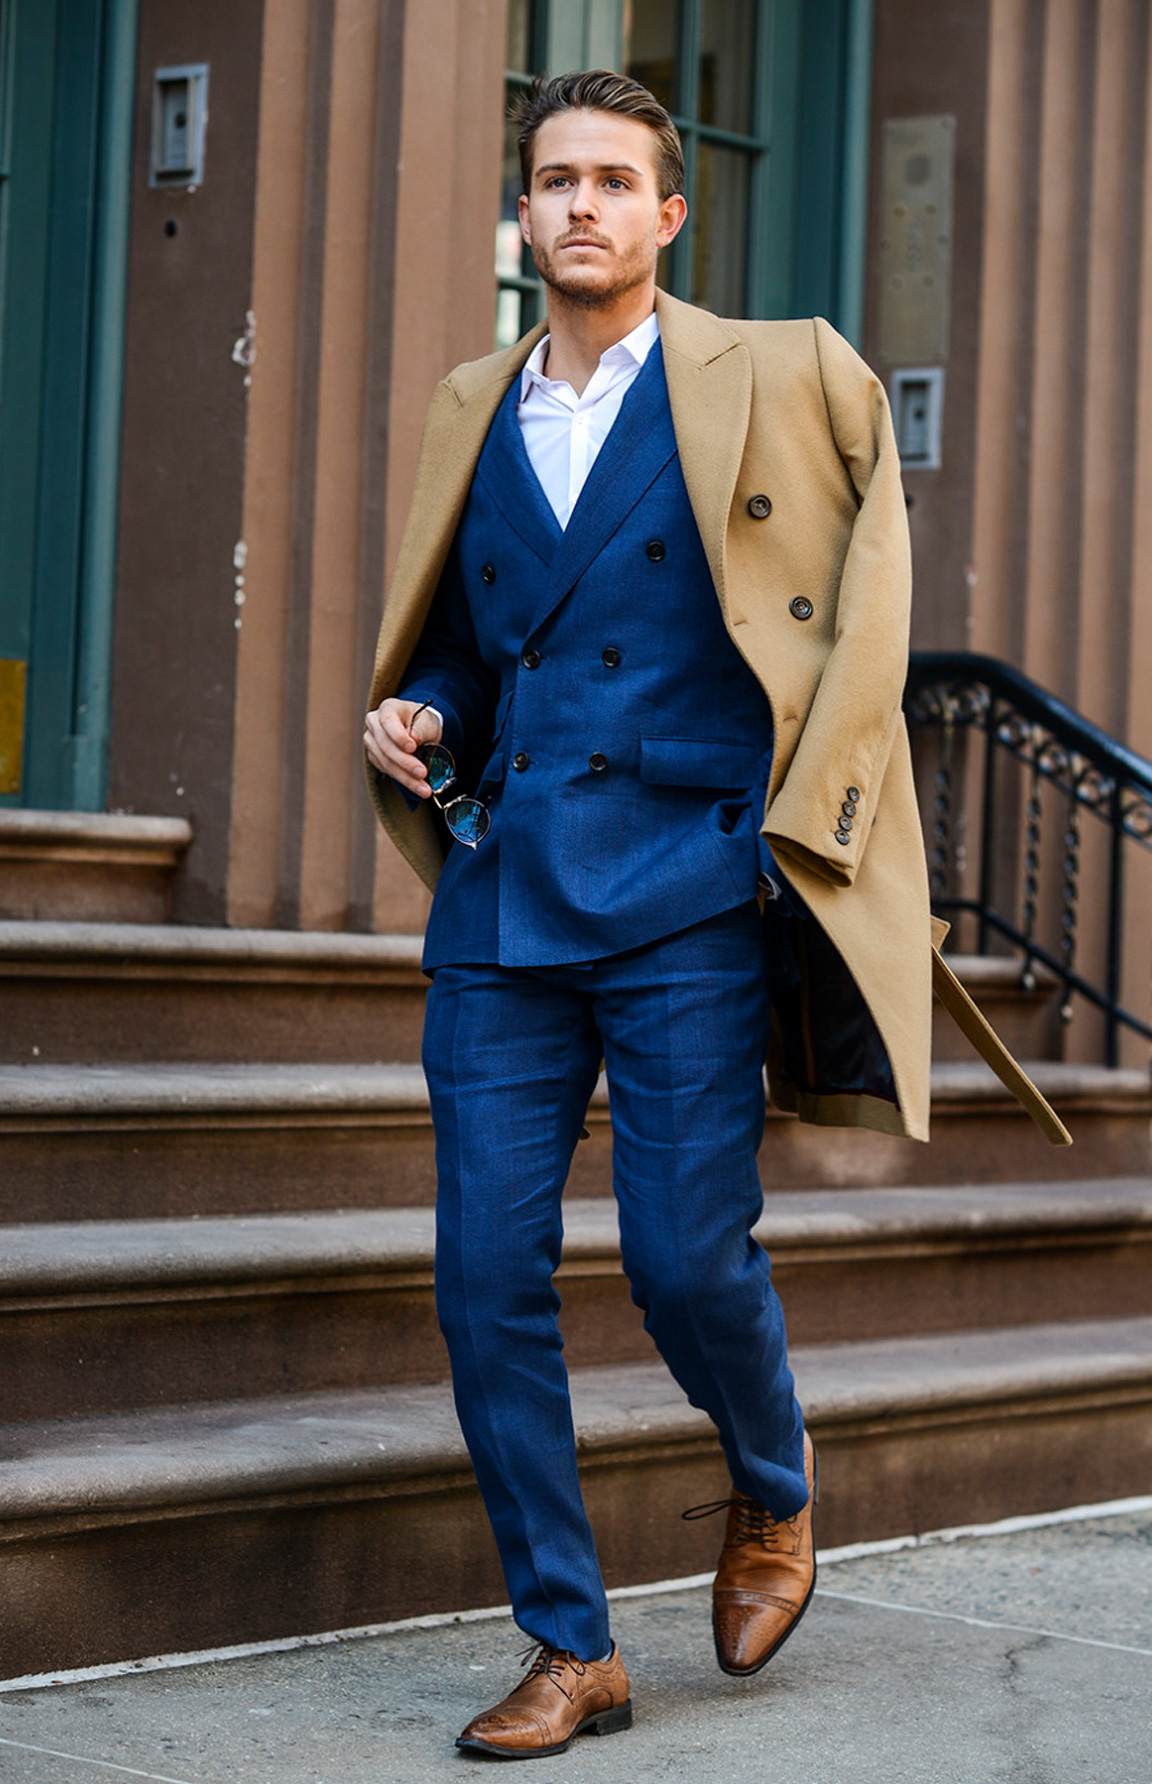 Menswear Influencer Adam Gallagher in an Indochino custom suit.